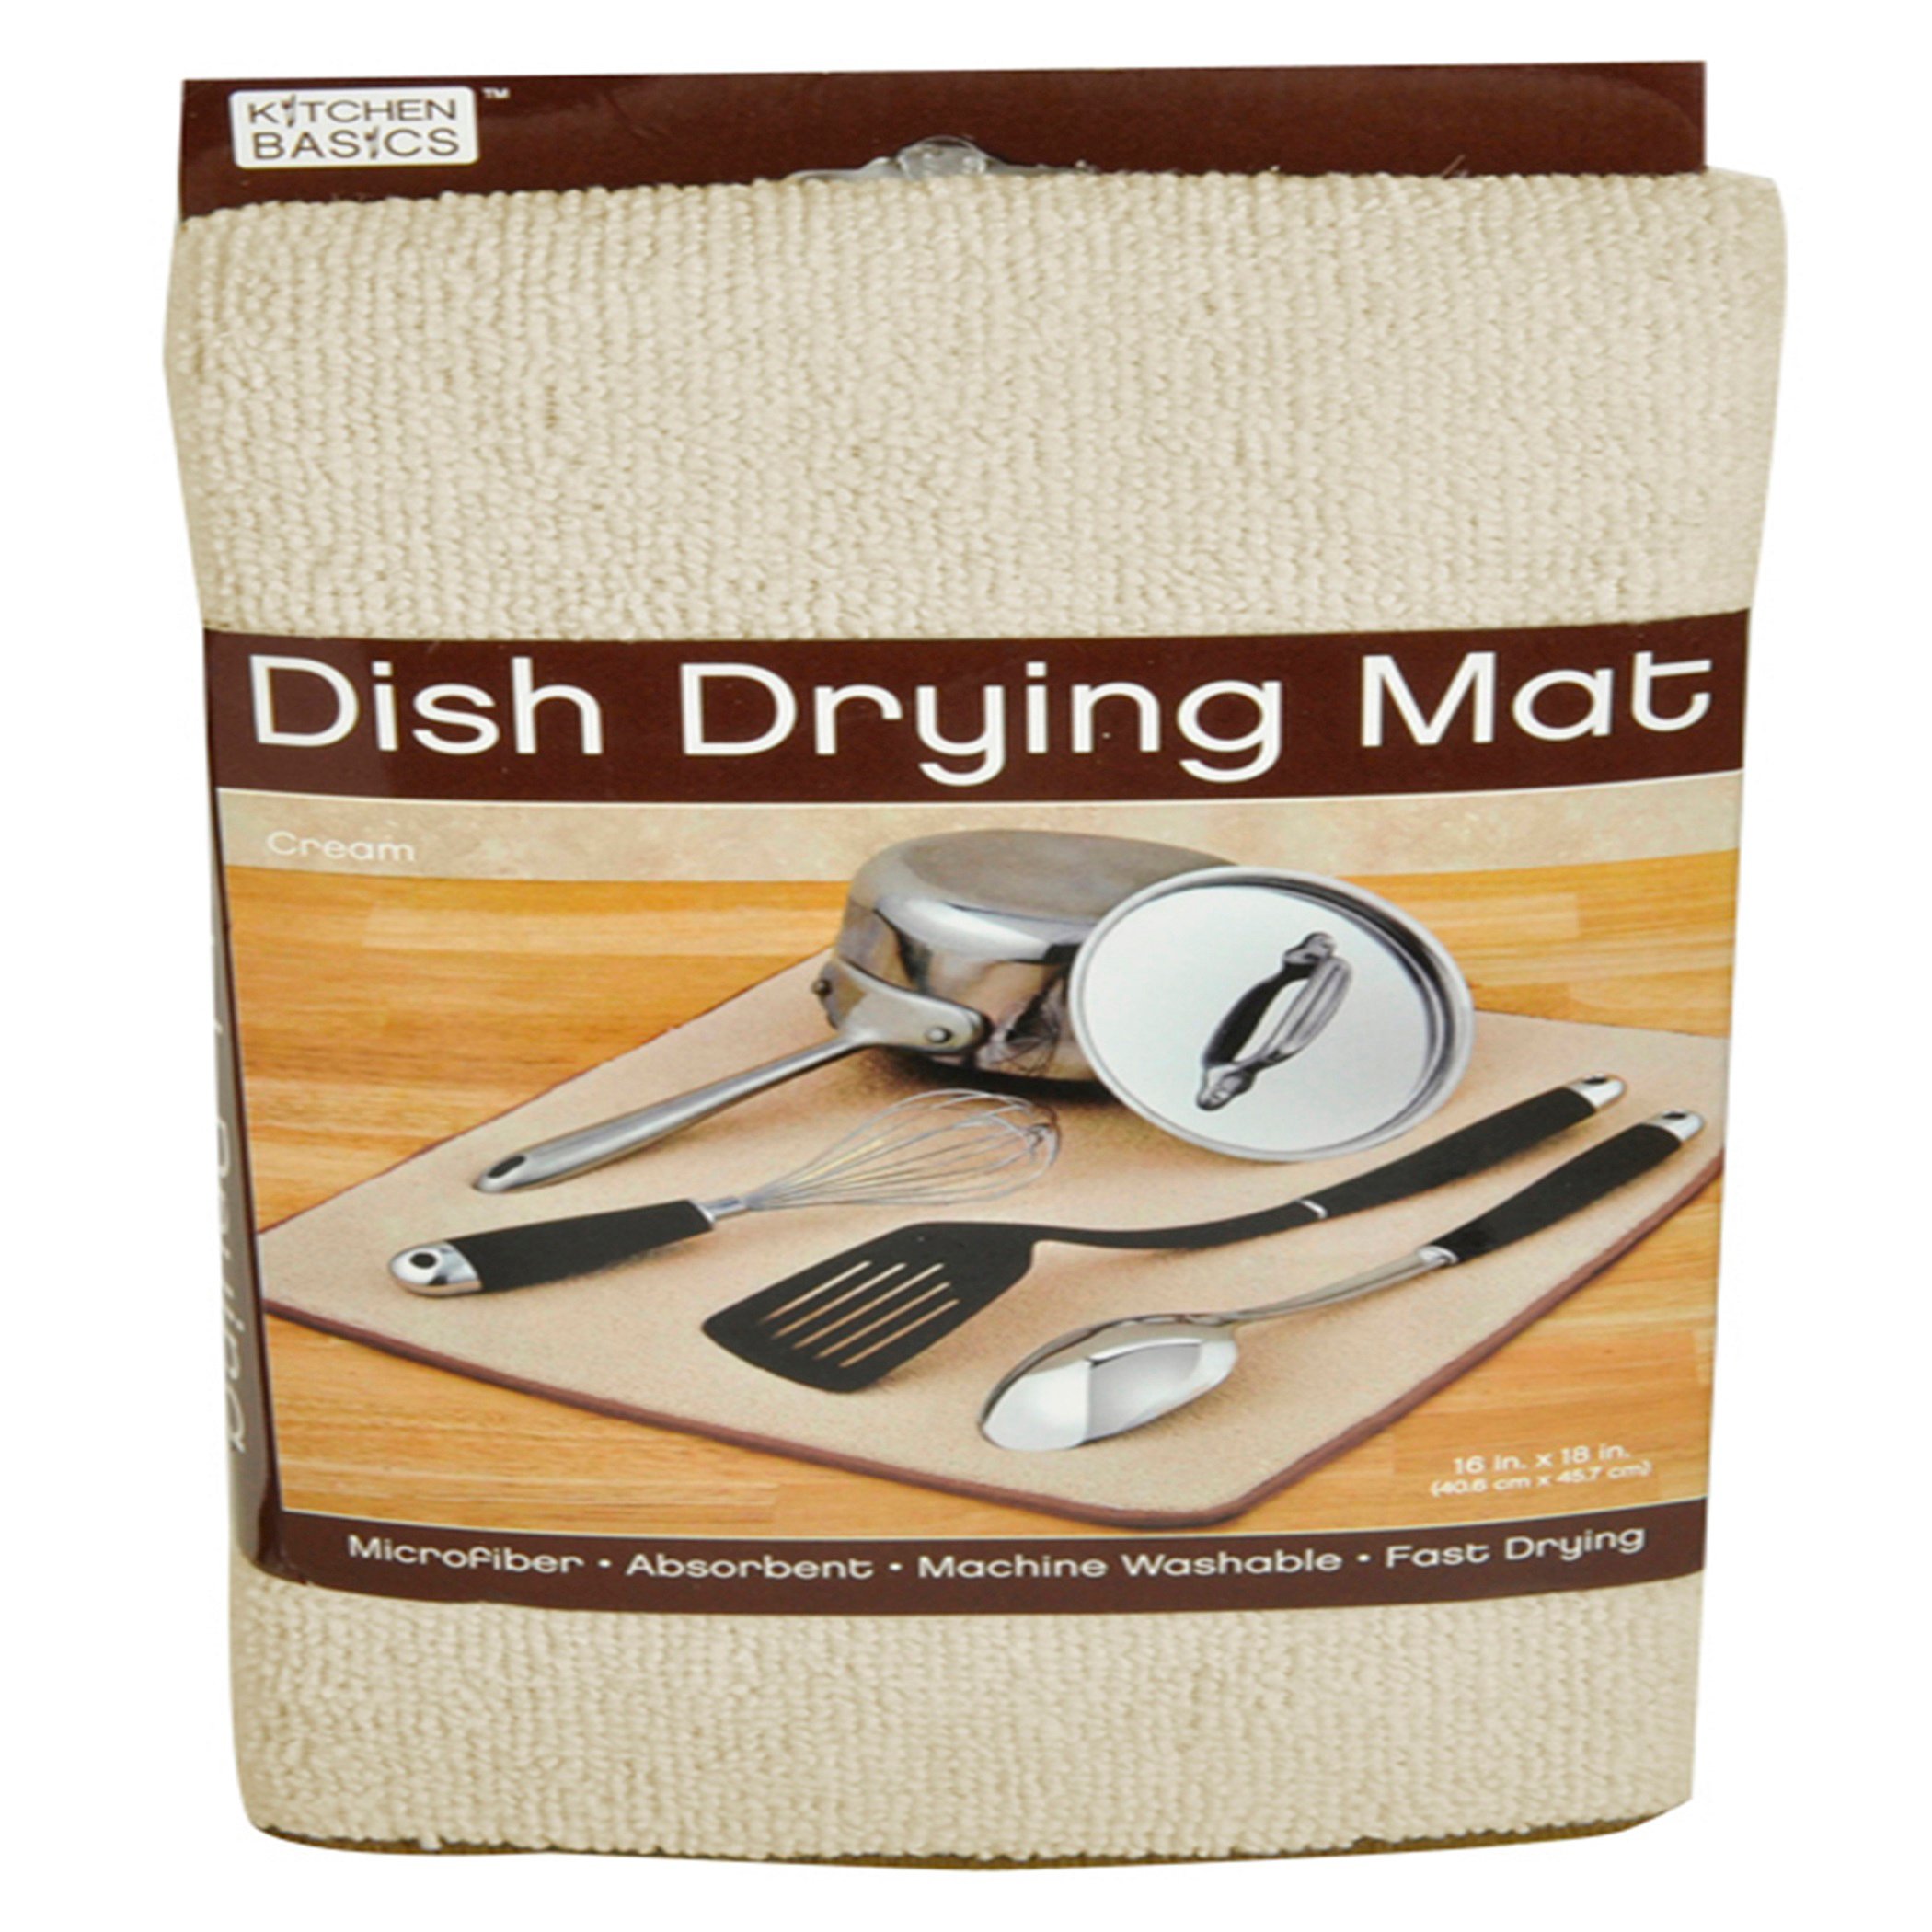 Kitchen Basics Dish Drying Mat - Cream Color - Shop Dish Drainers